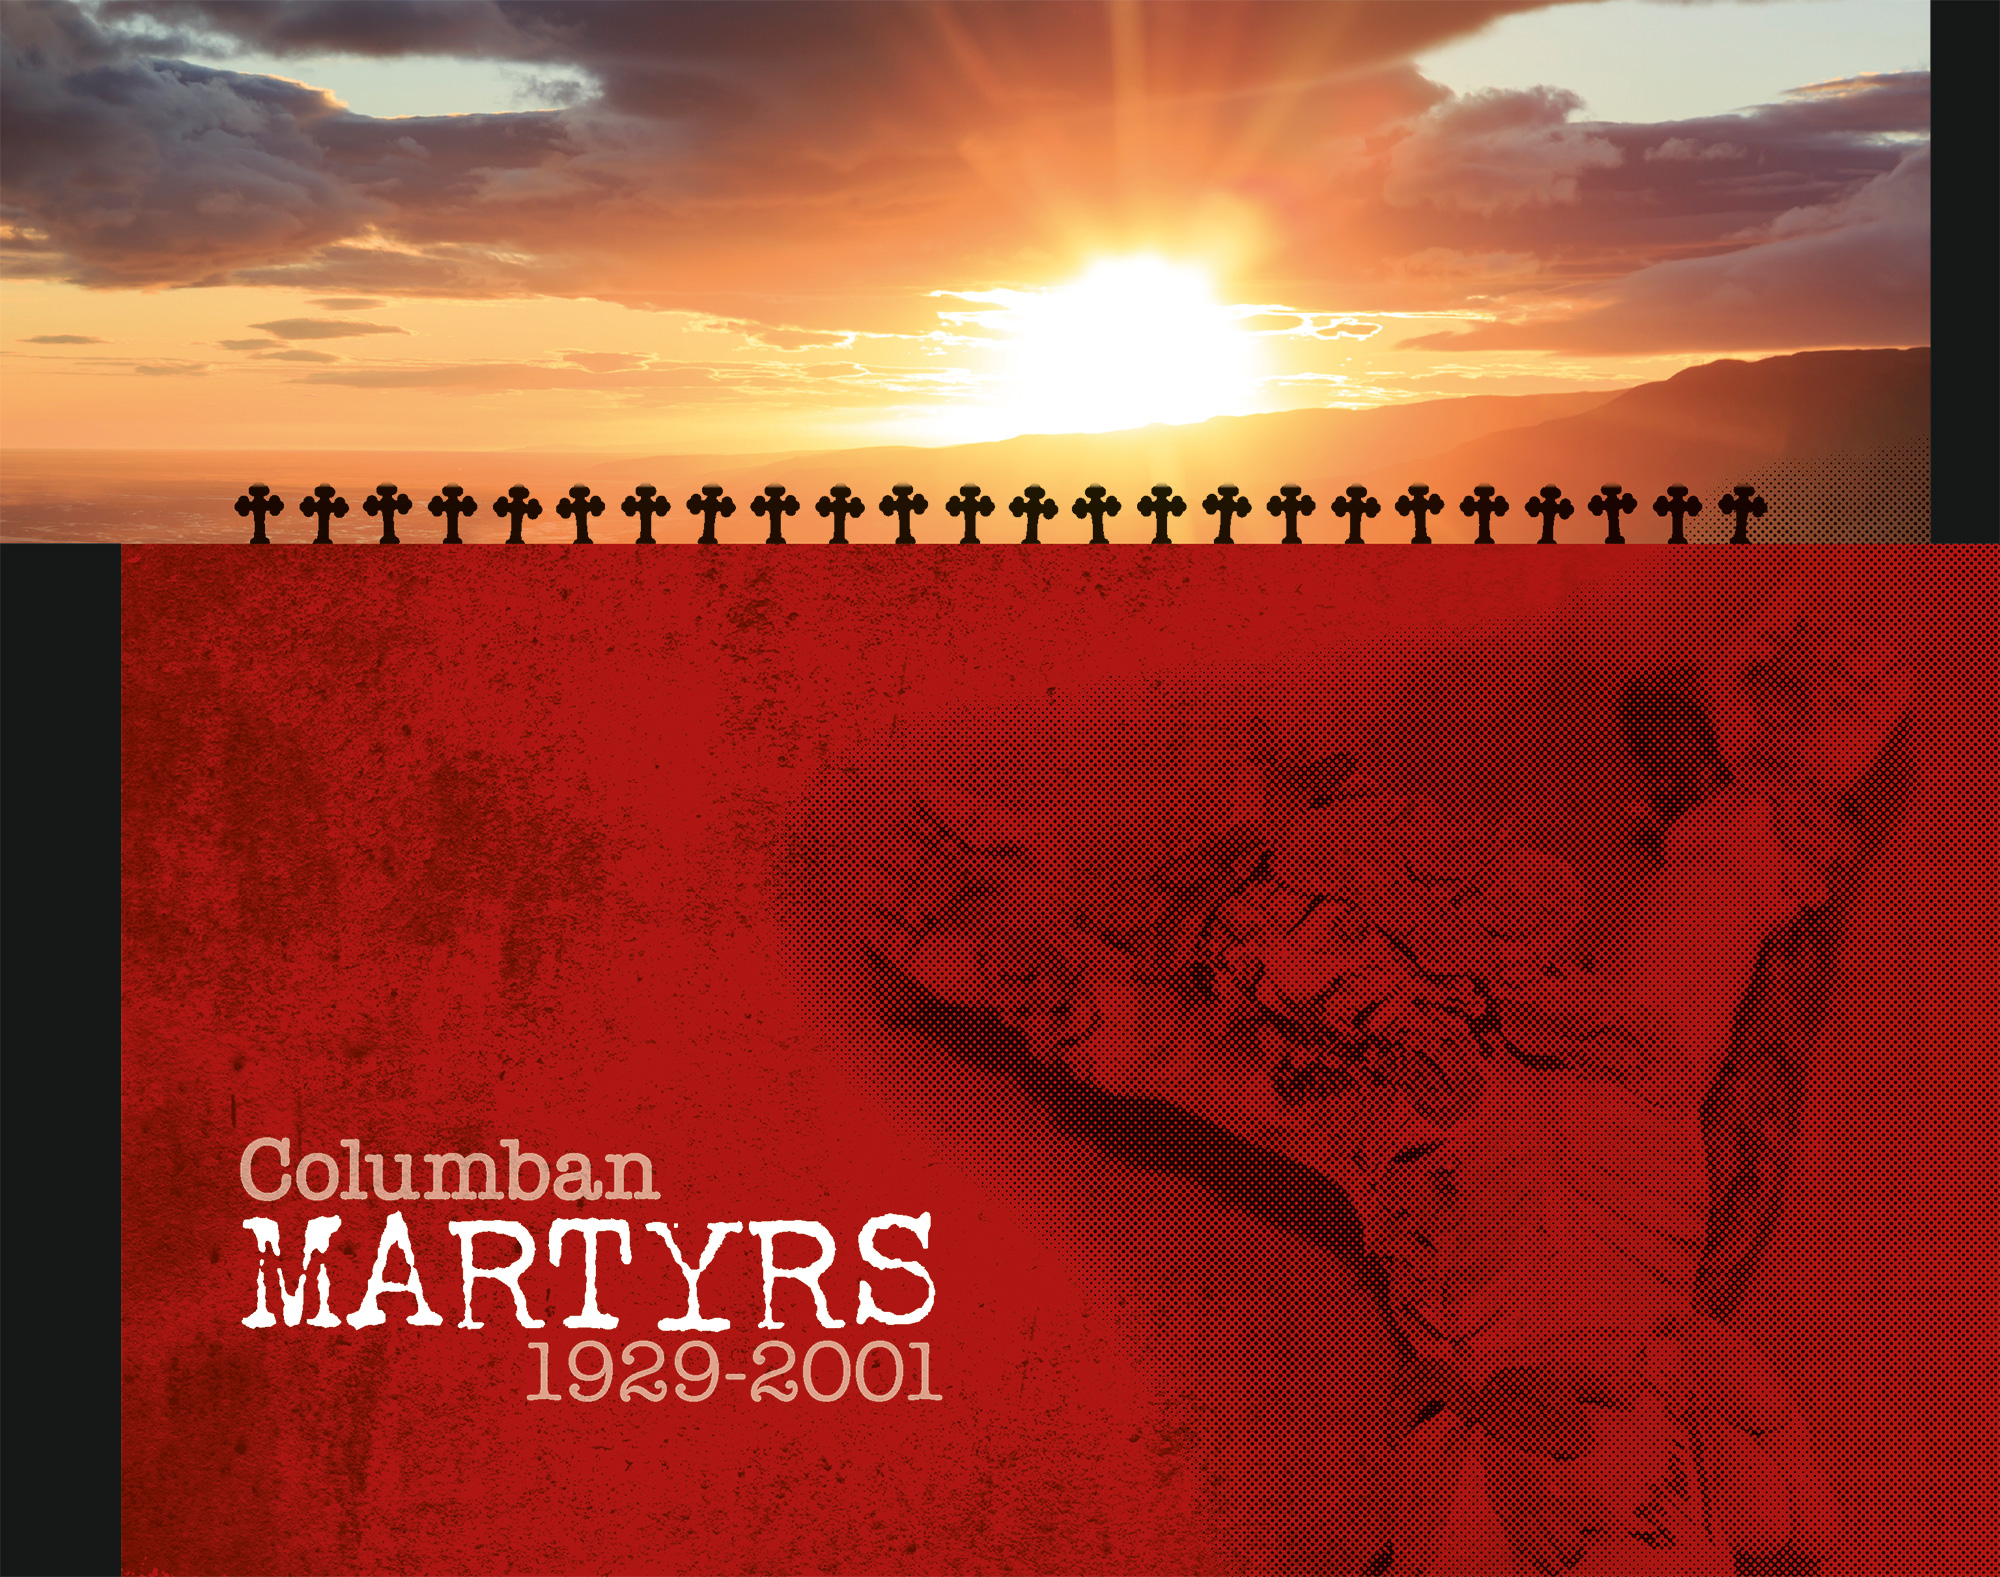 New Booklet Honours Columban Martyrs